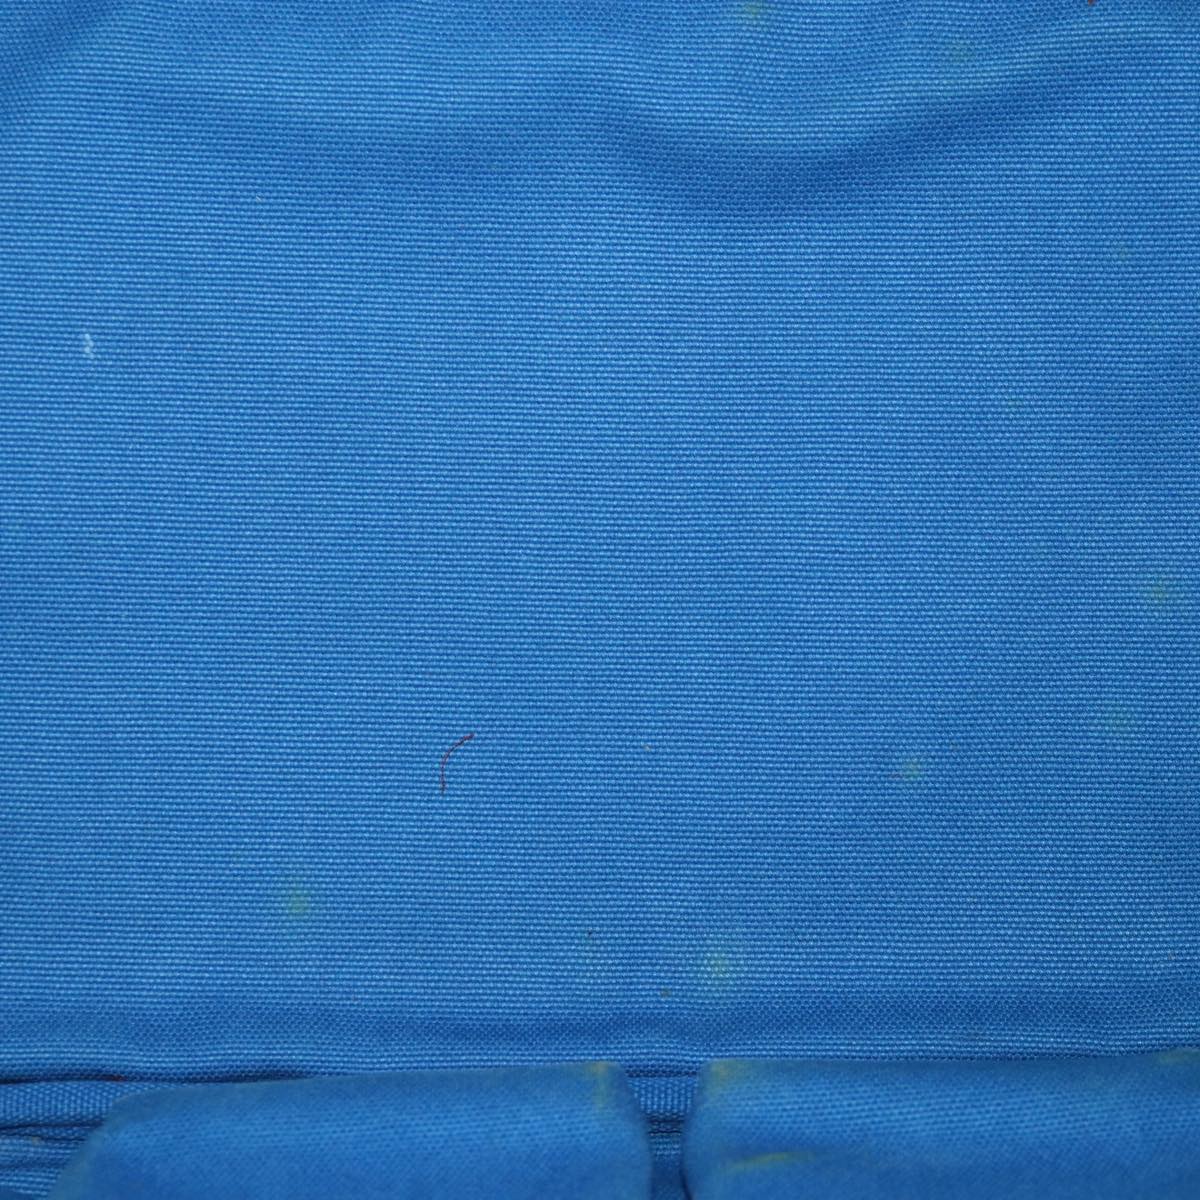 PRADA Canapa MM Hand Bag Canvas Blue Auth 77361